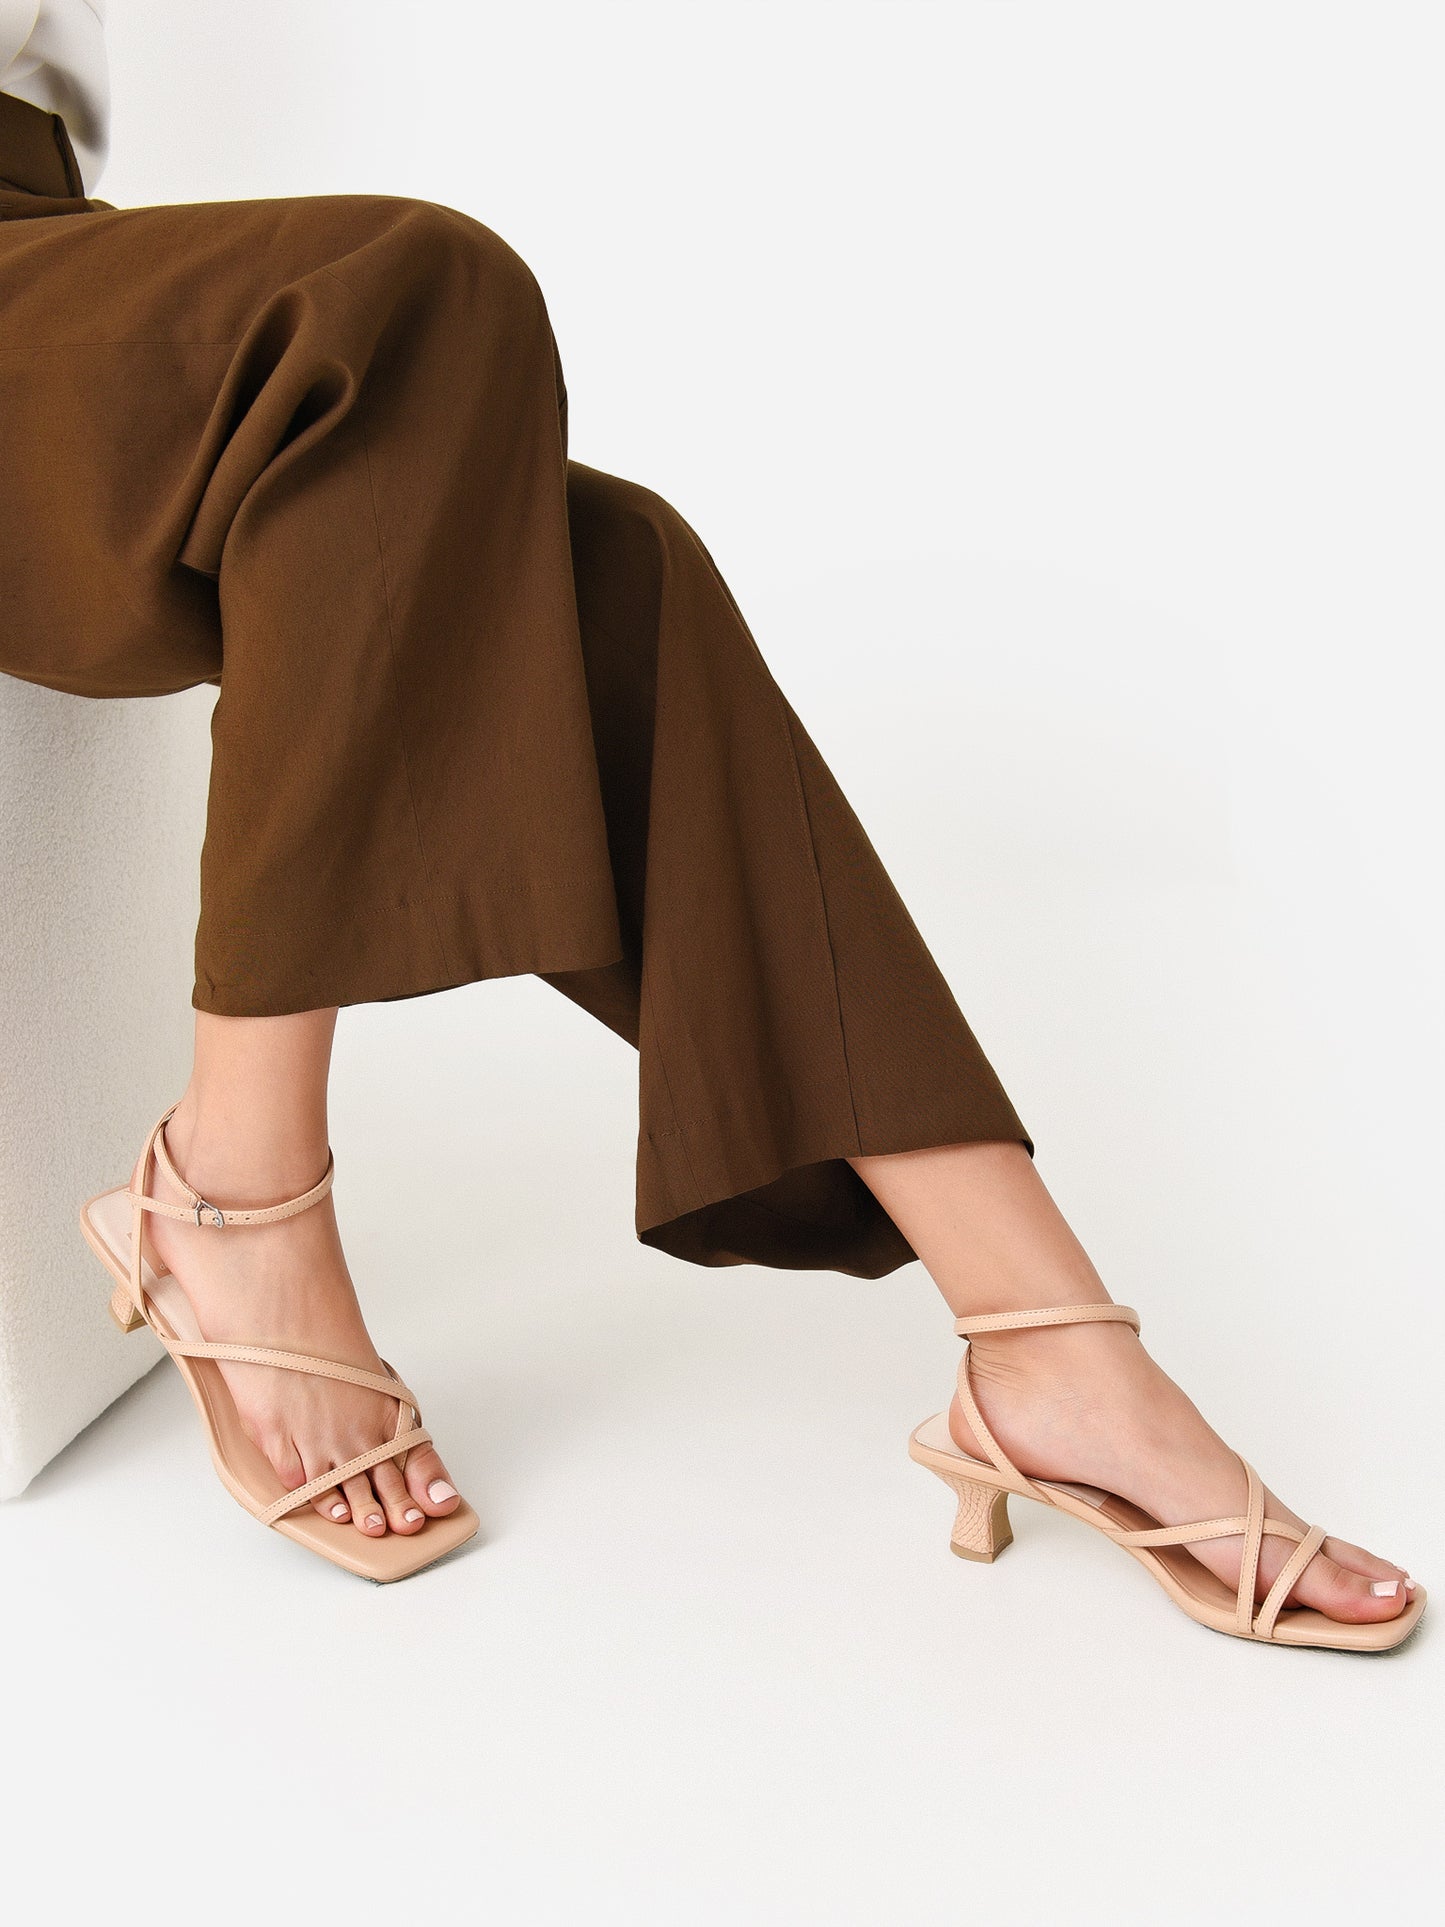 Dolce Vita Women's Baylor Heeled Sandal